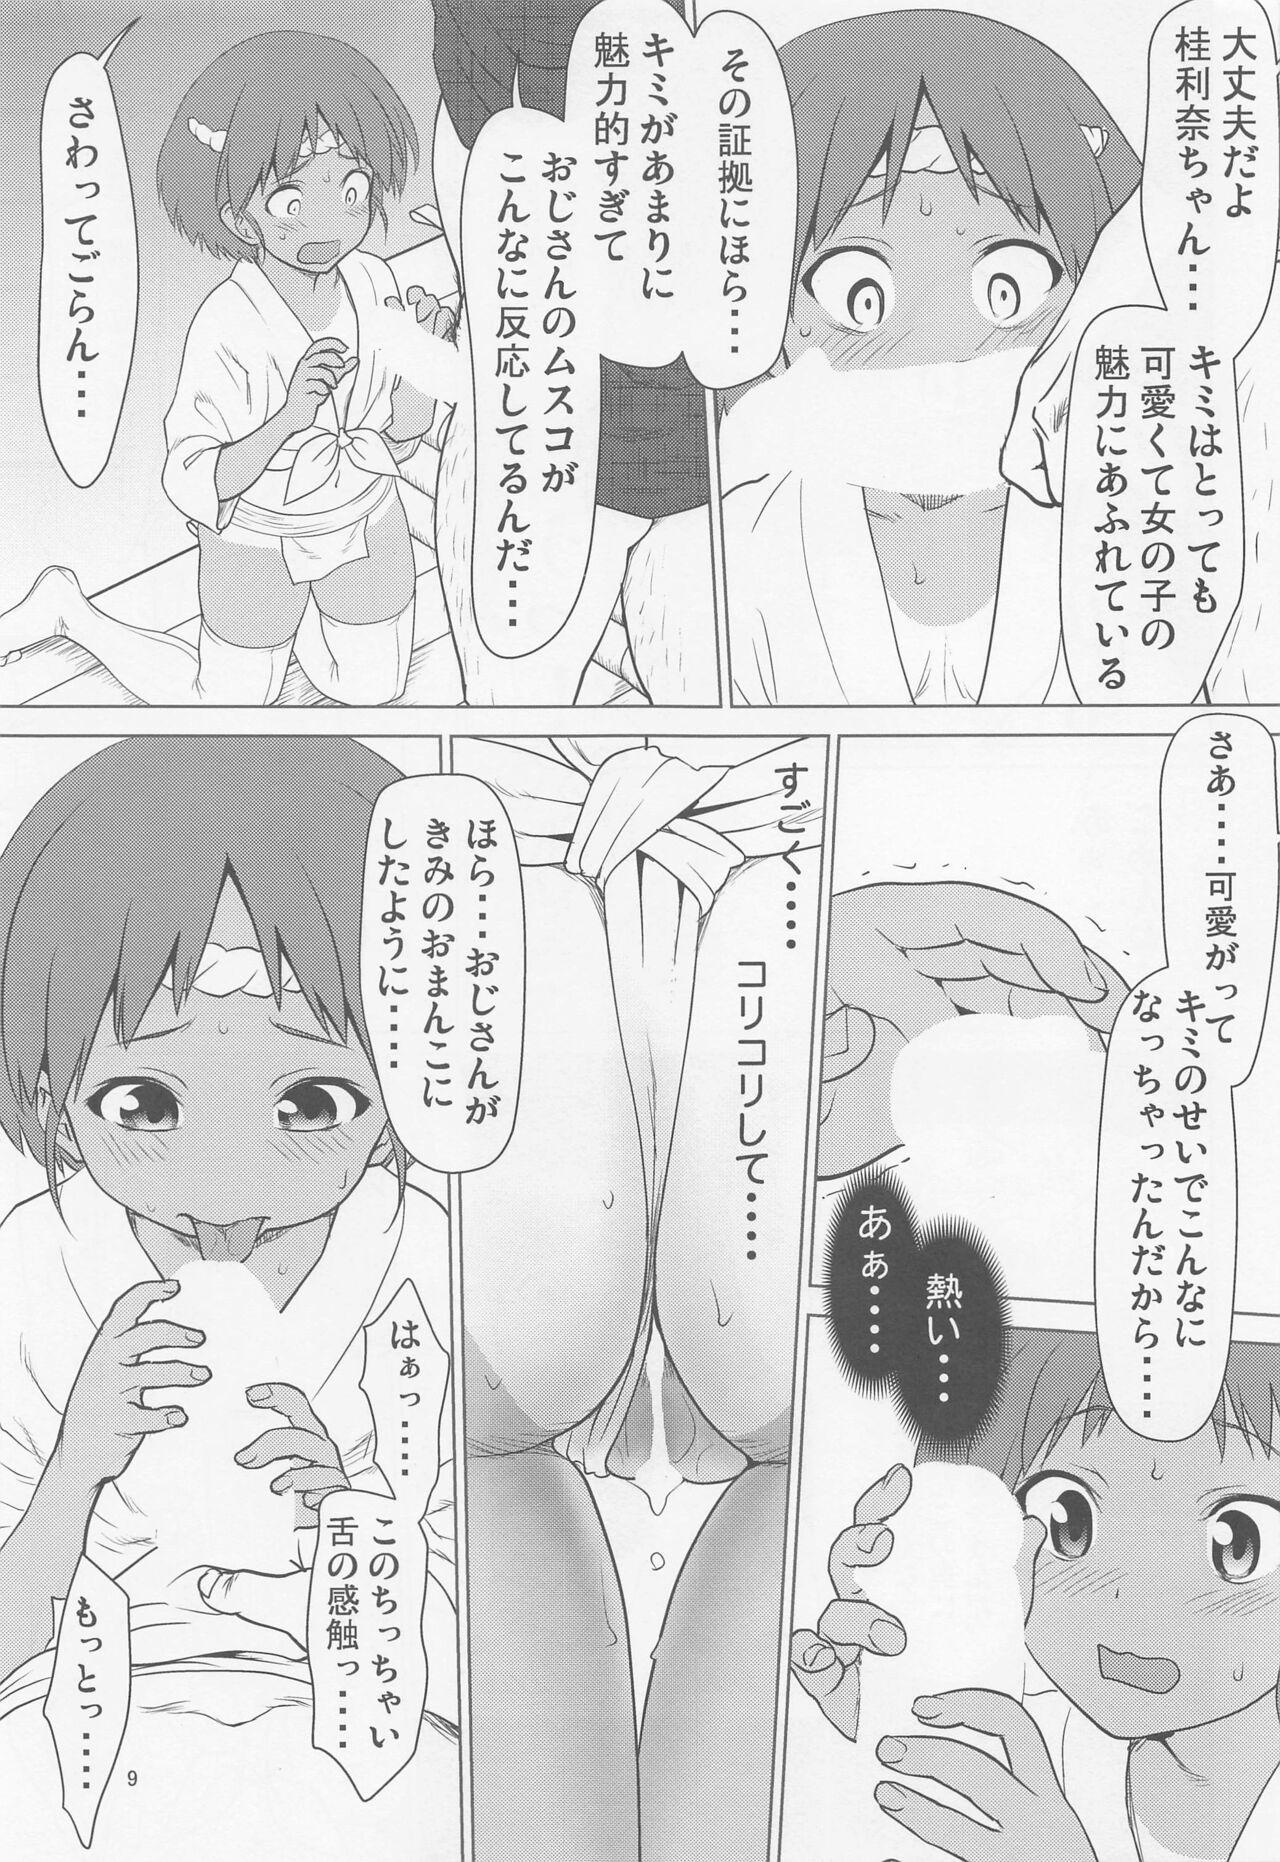 Studs hiyakefundoshinokarinachantomonokagede・・・・ Madura - Page 8